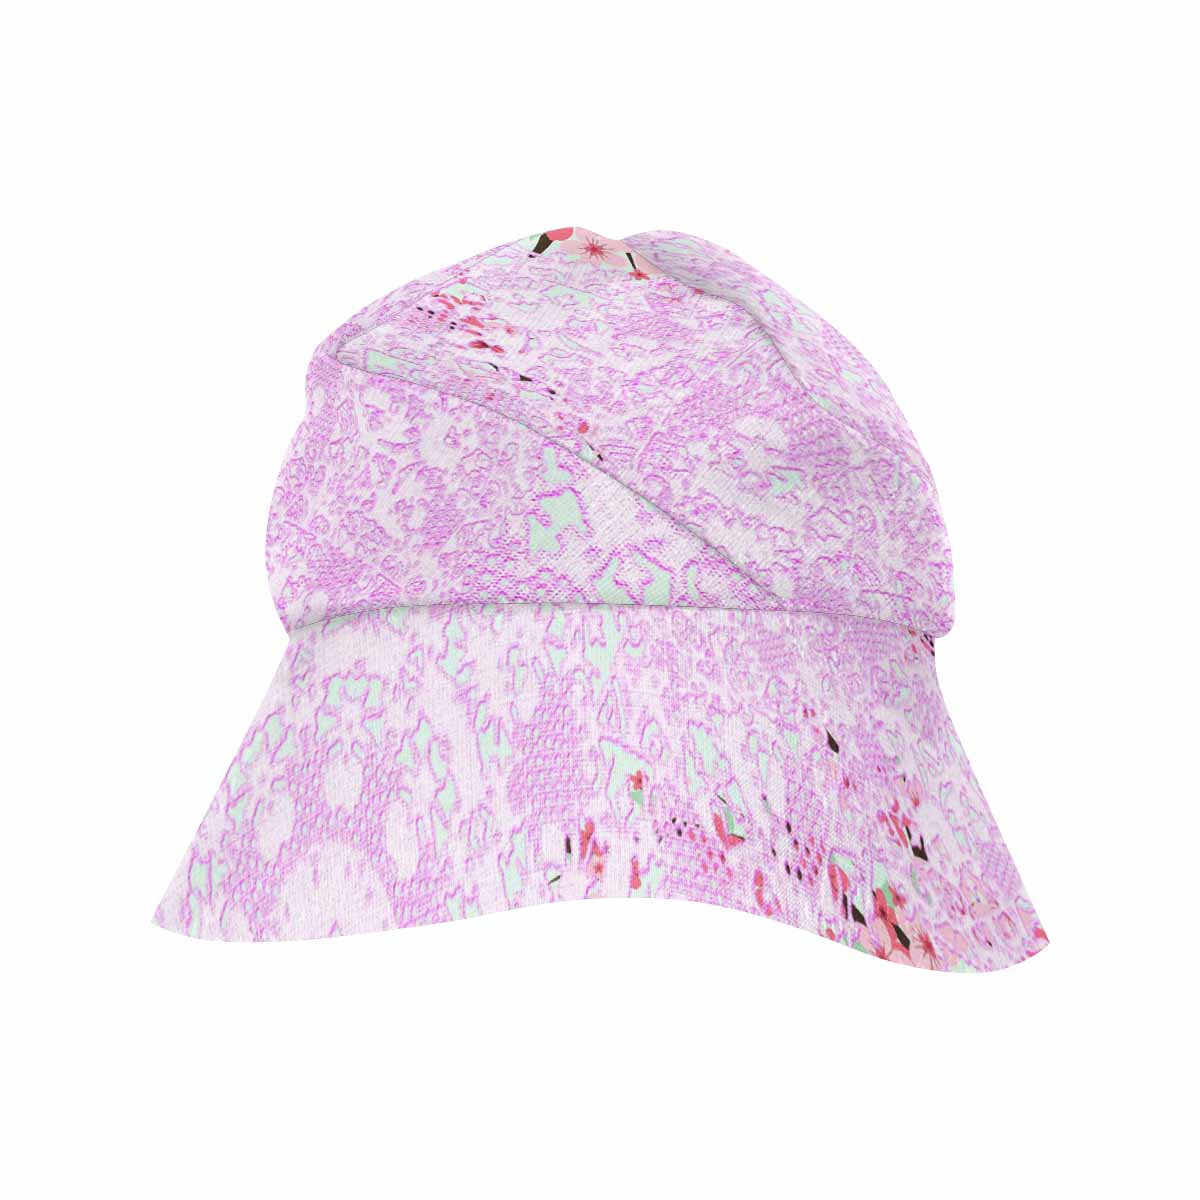 Victorian lace print, wide brim sunvisor Hat, outdoors hat, design 09